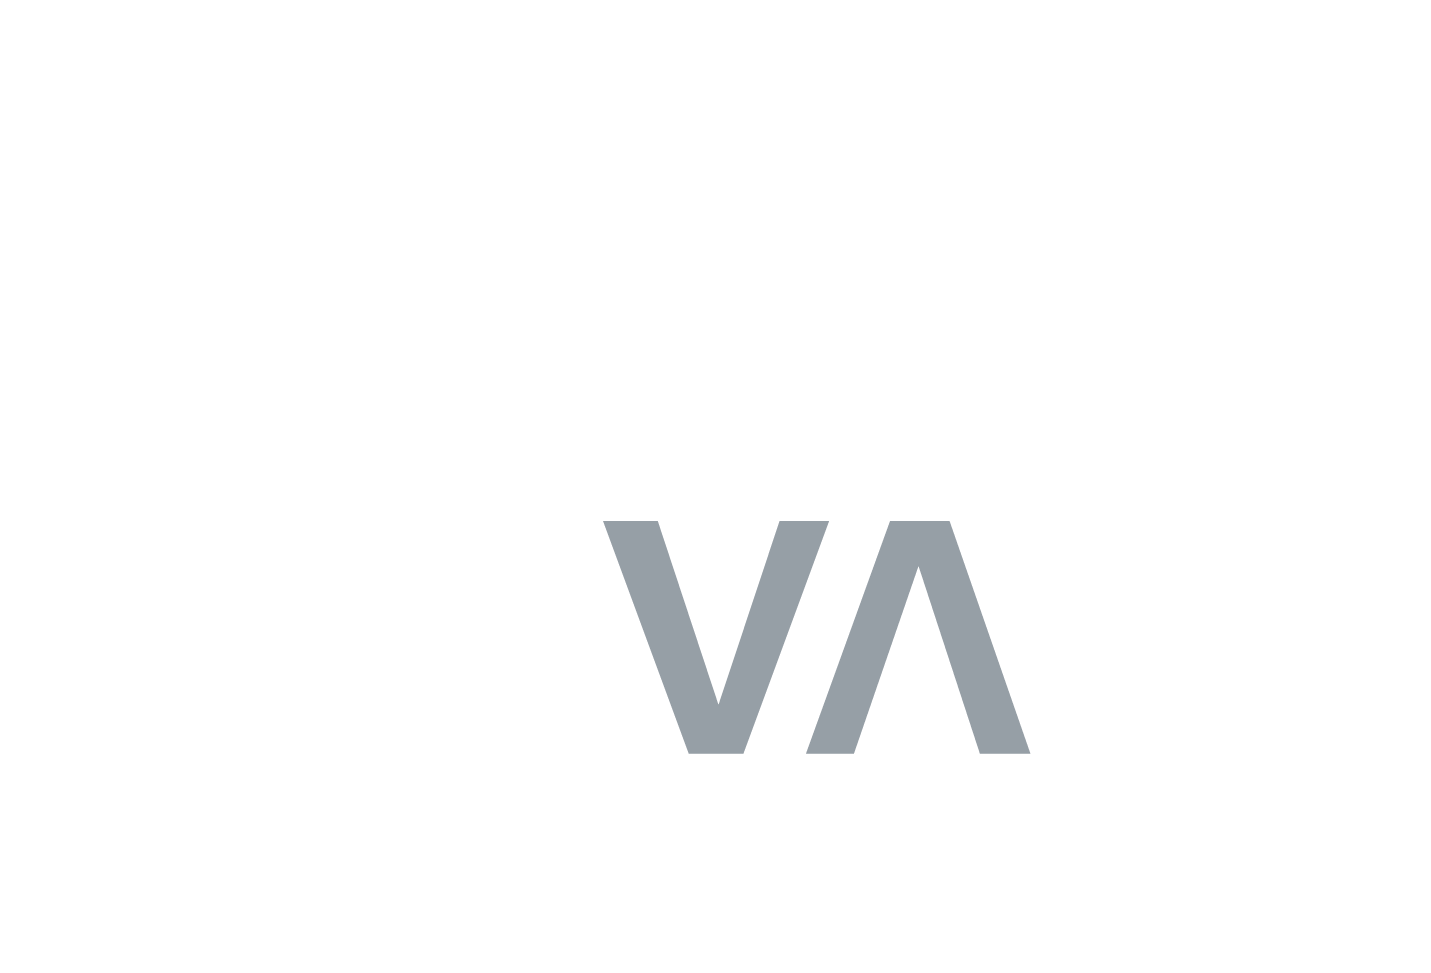 Elevate You VA Logo